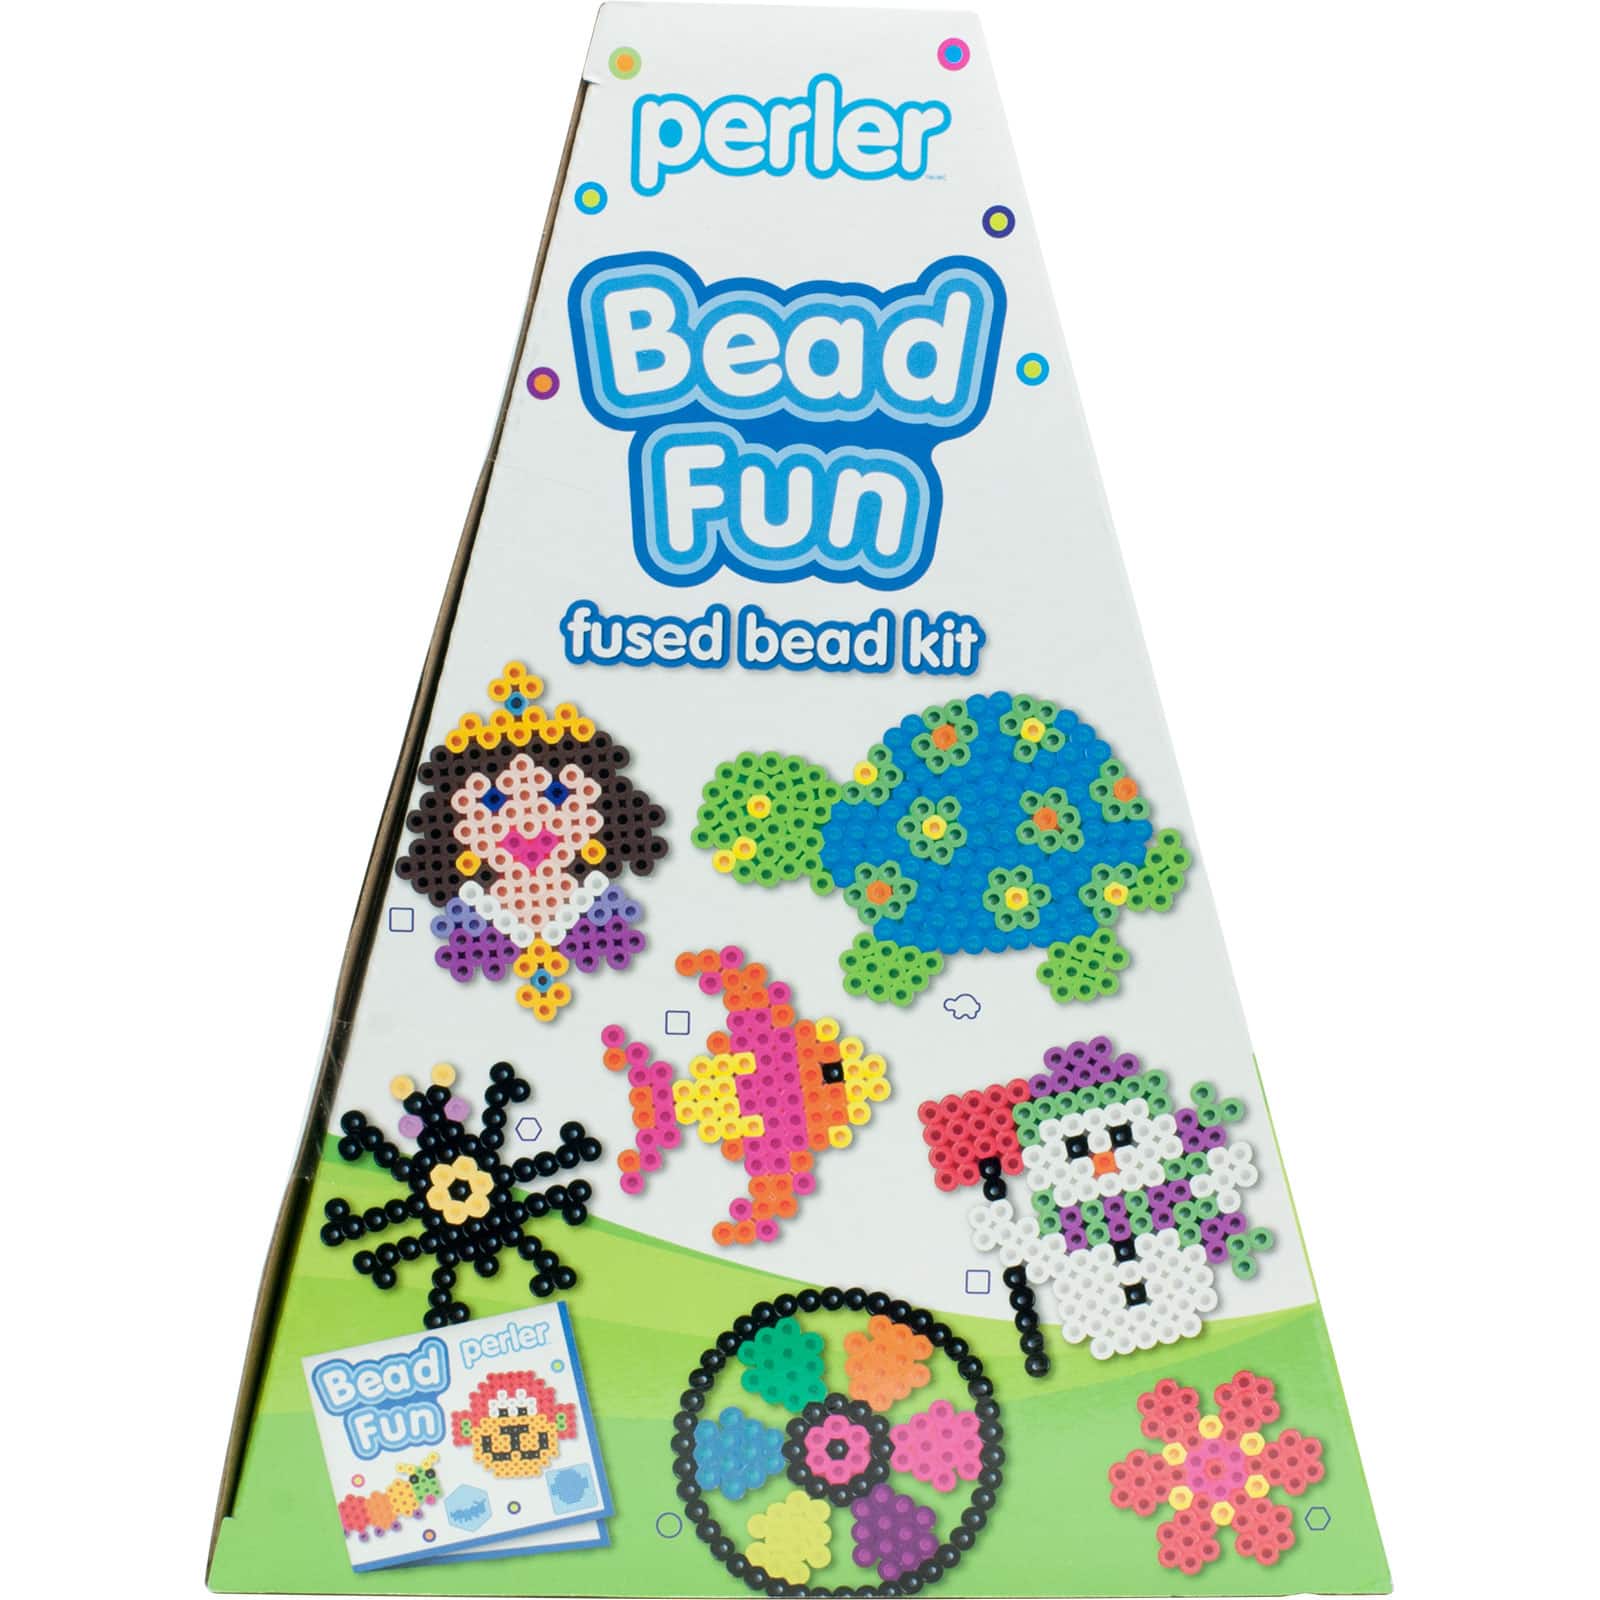 Perler&#x2122; Bead Fun Fused Bead Kit